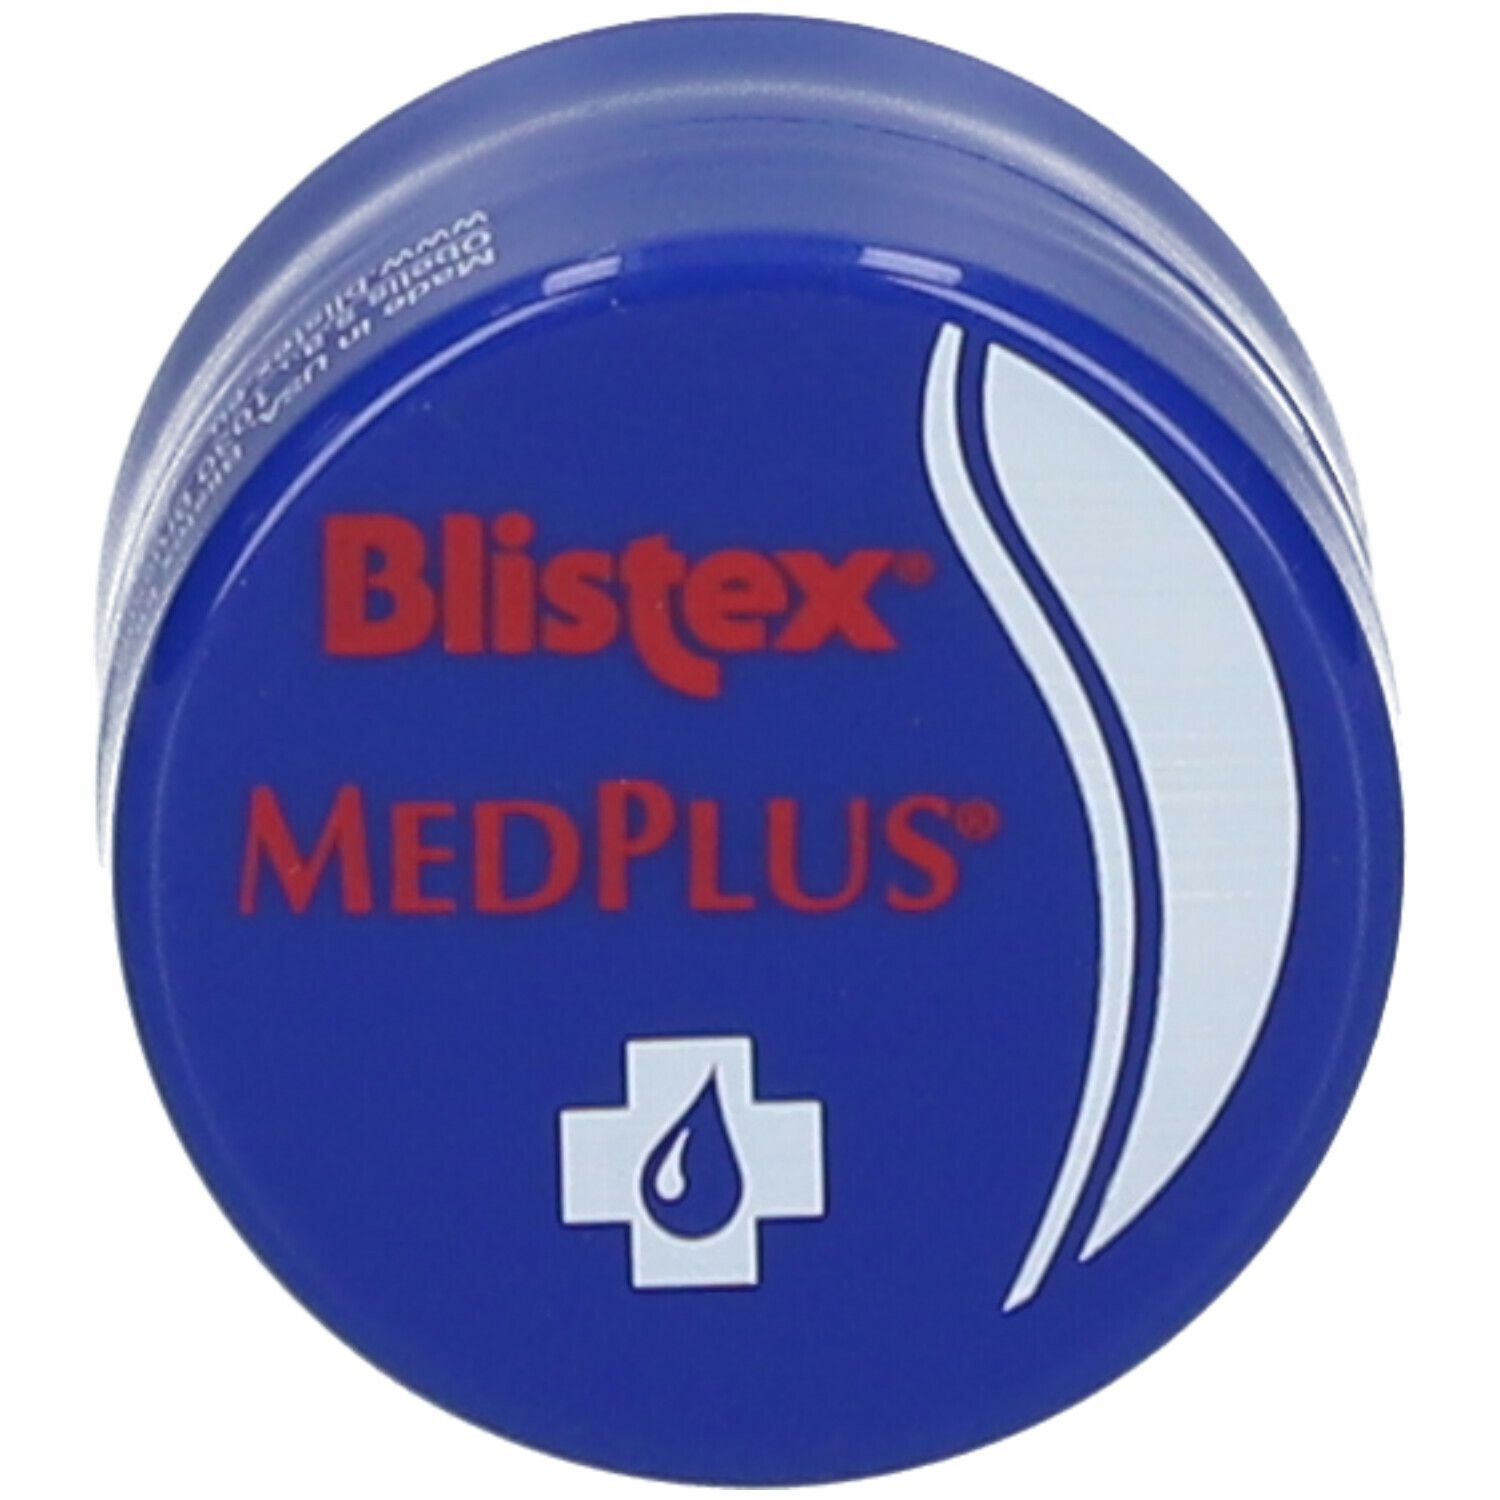 Blistex MedPlus®